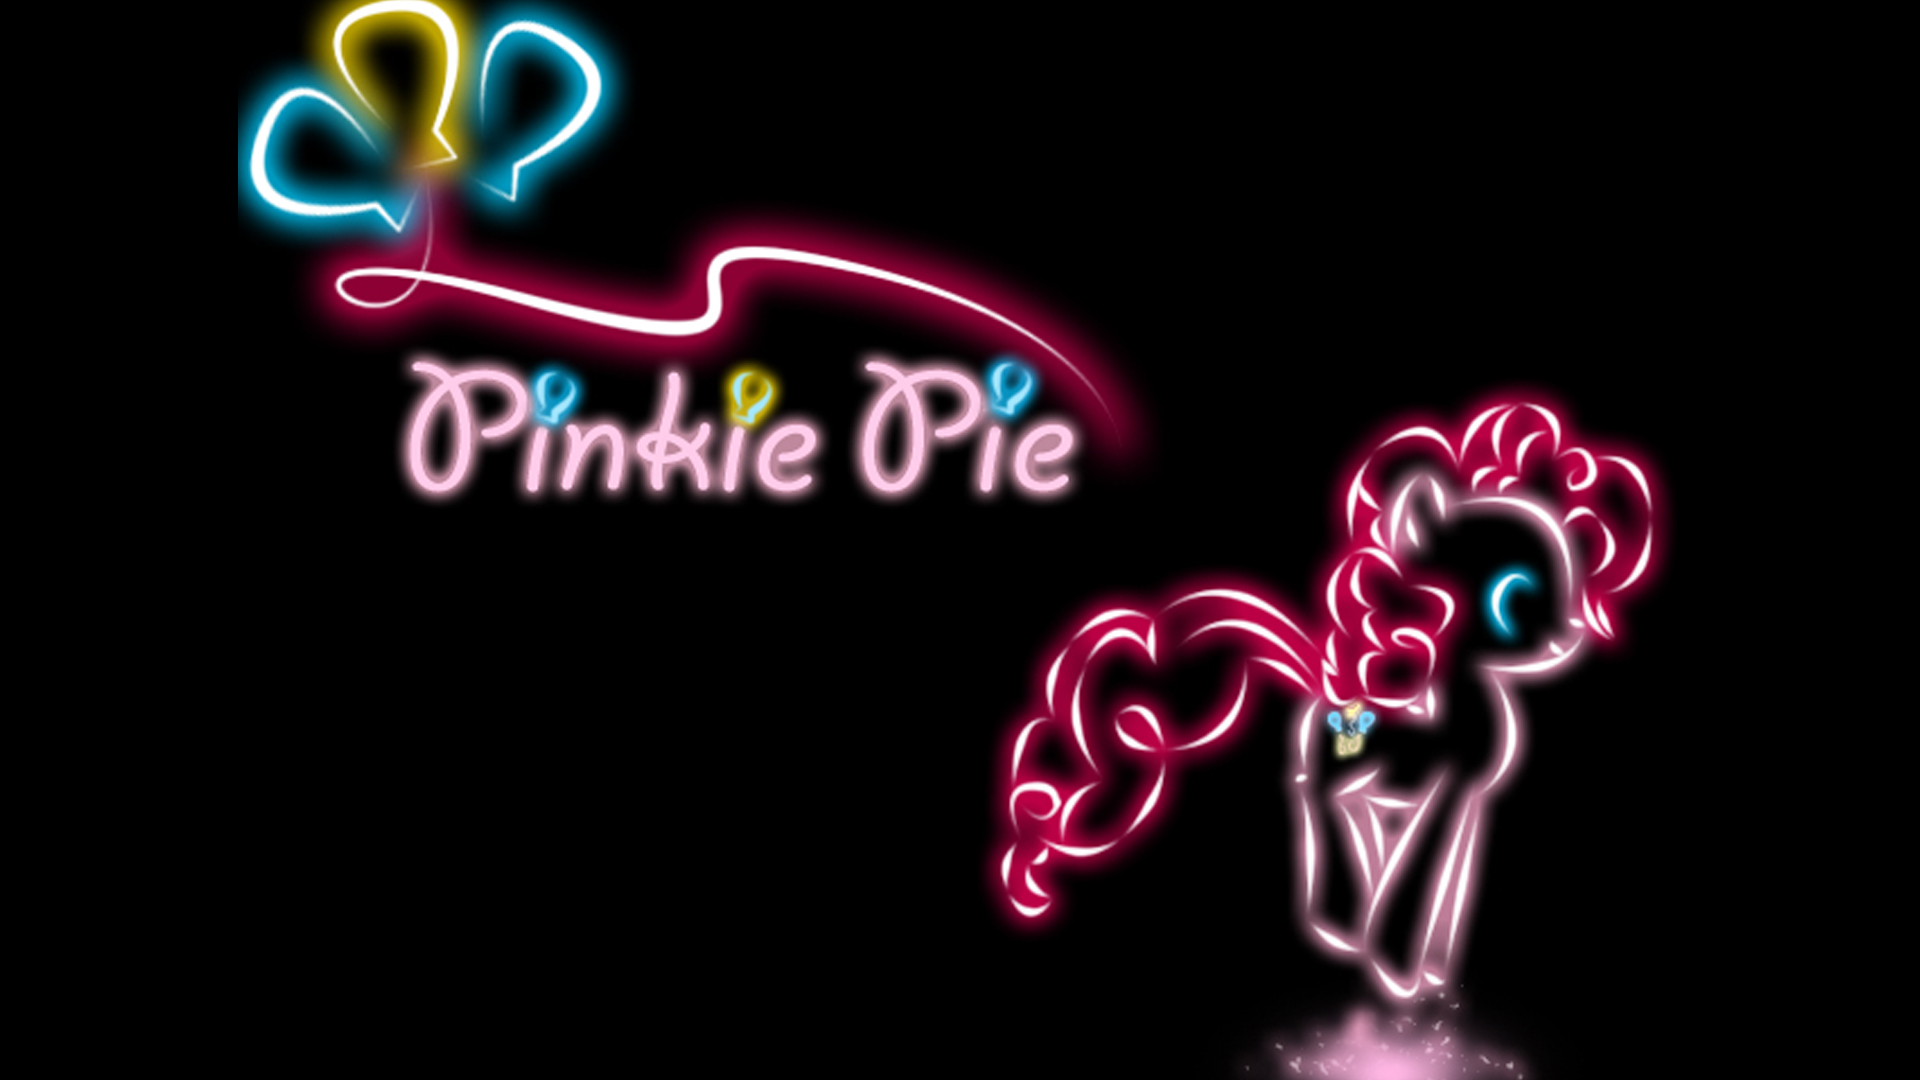 Pinkie Pie Wallpaper 2.0 by buckheadgar